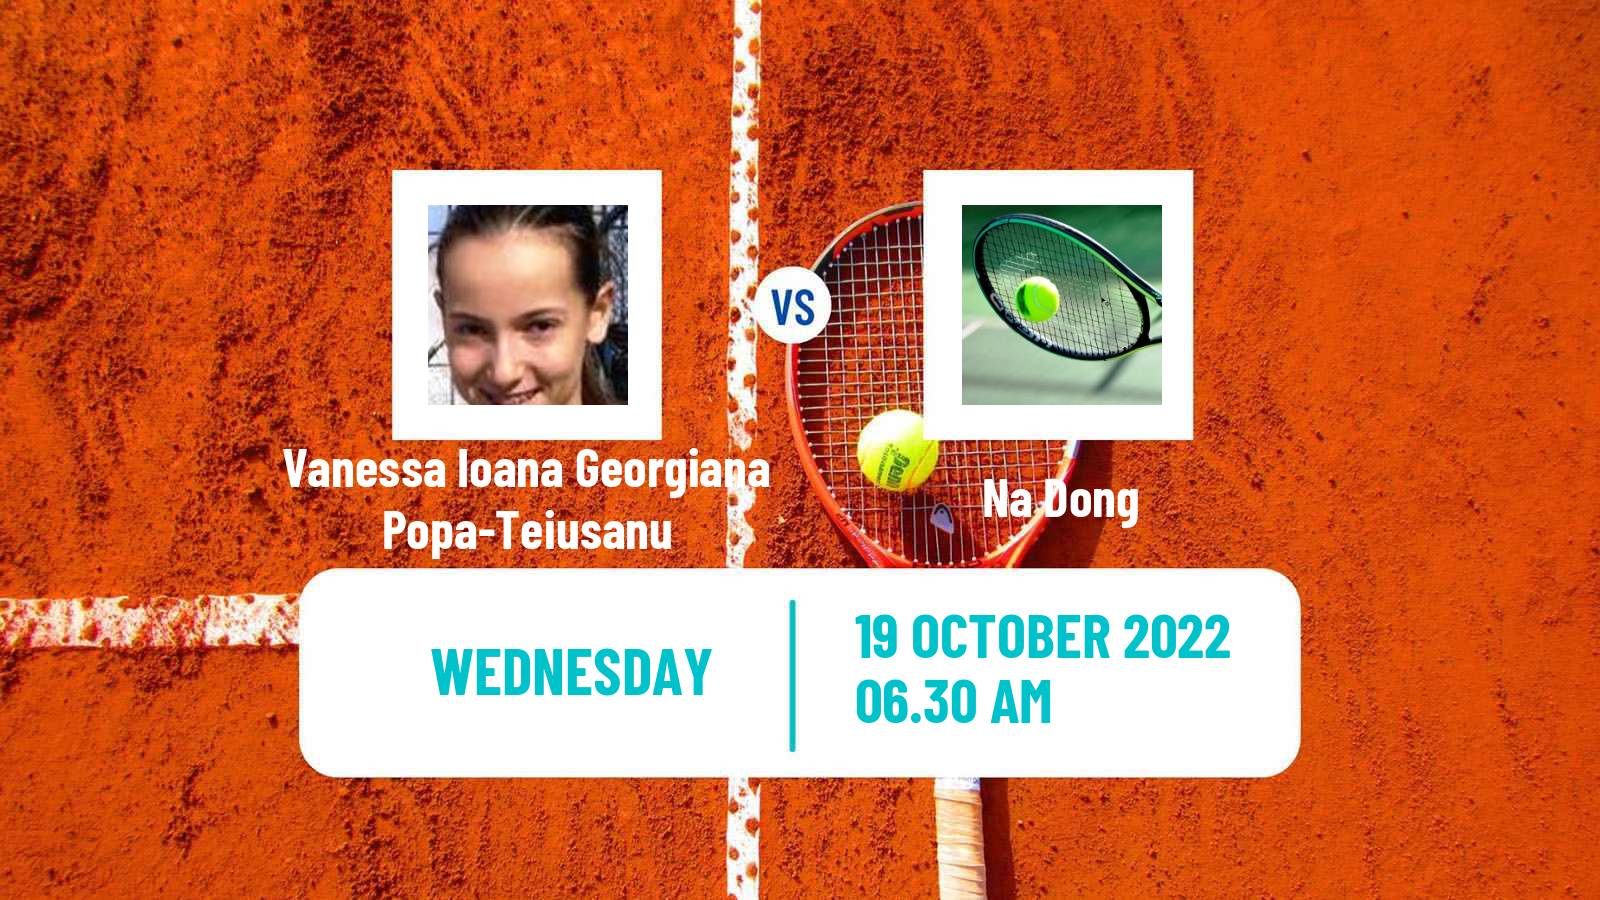 Tennis ITF Tournaments Vanessa Ioana Georgiana Popa-Teiusanu - Na Dong